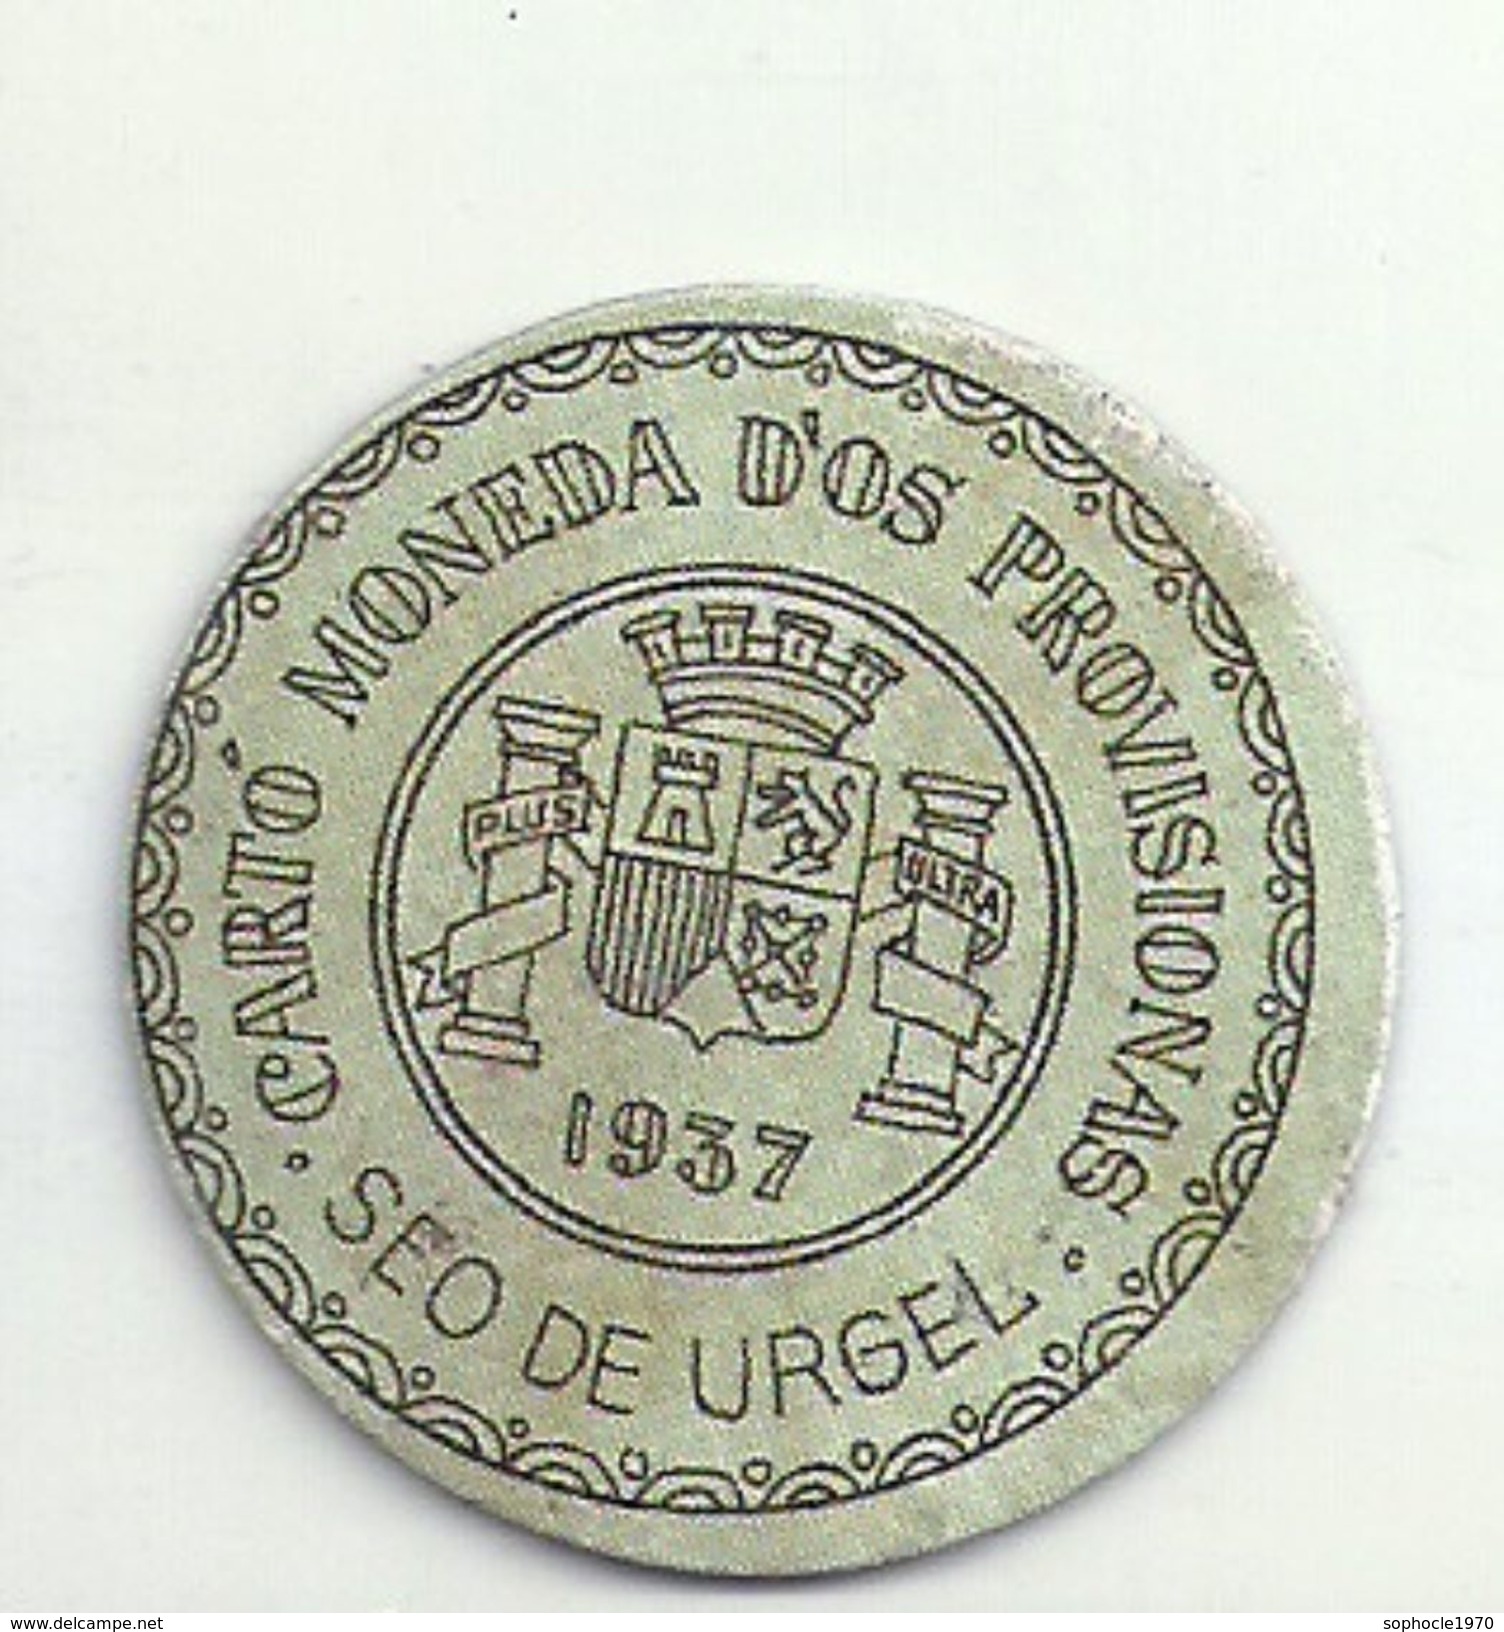 ESPAGNE - 1937 - République Espagnole  CATALOGNR - SEO DE URGEL -  Monéda D'Os Provisionas - Monnaie Carton Timbre -  Monete Di Necessità